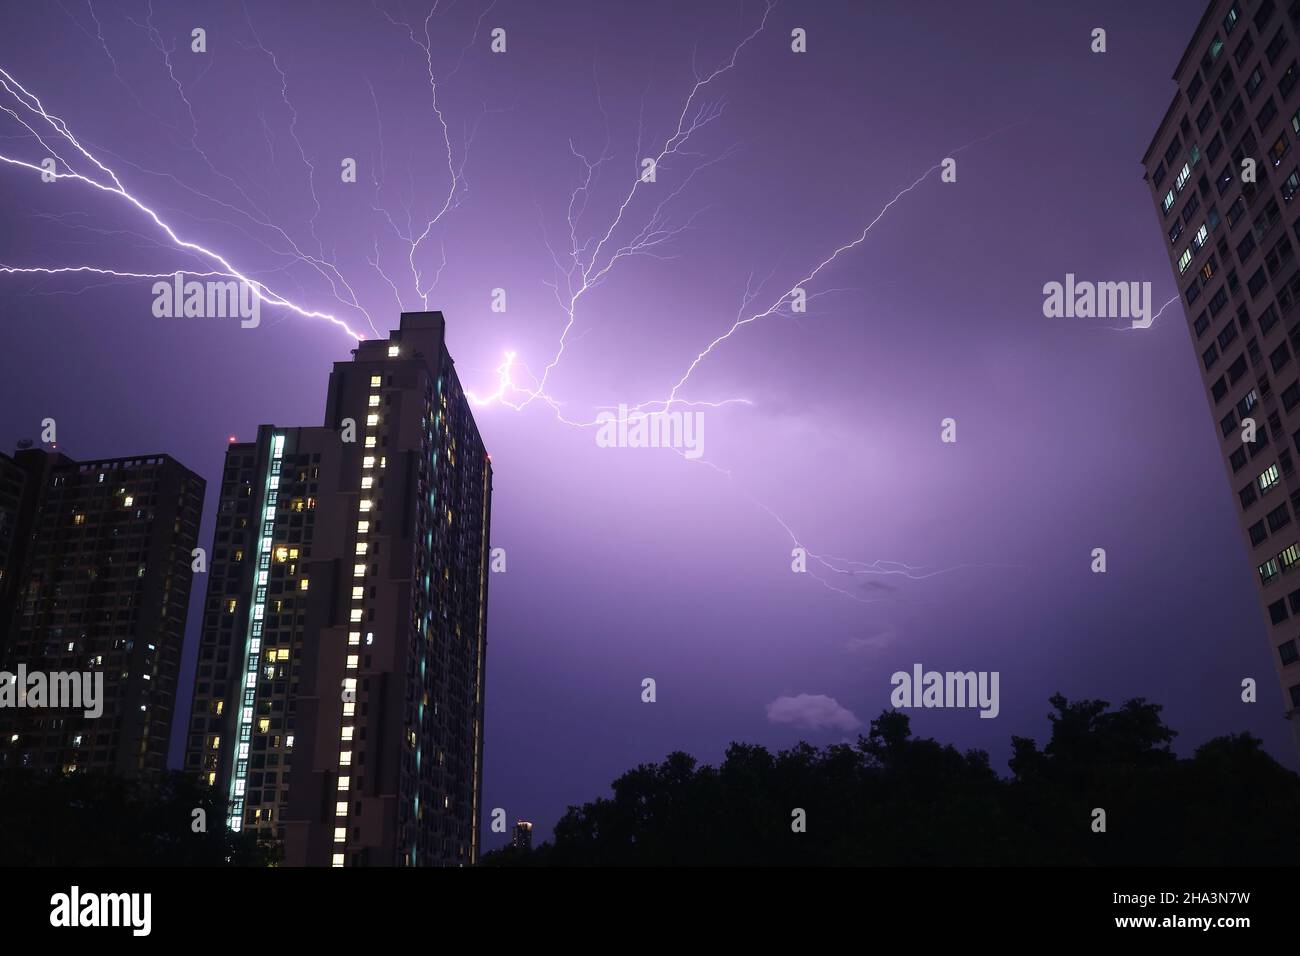 Spectacular Real Lightning Strikes in Dark Purple Urban Night Sky Stock Photo